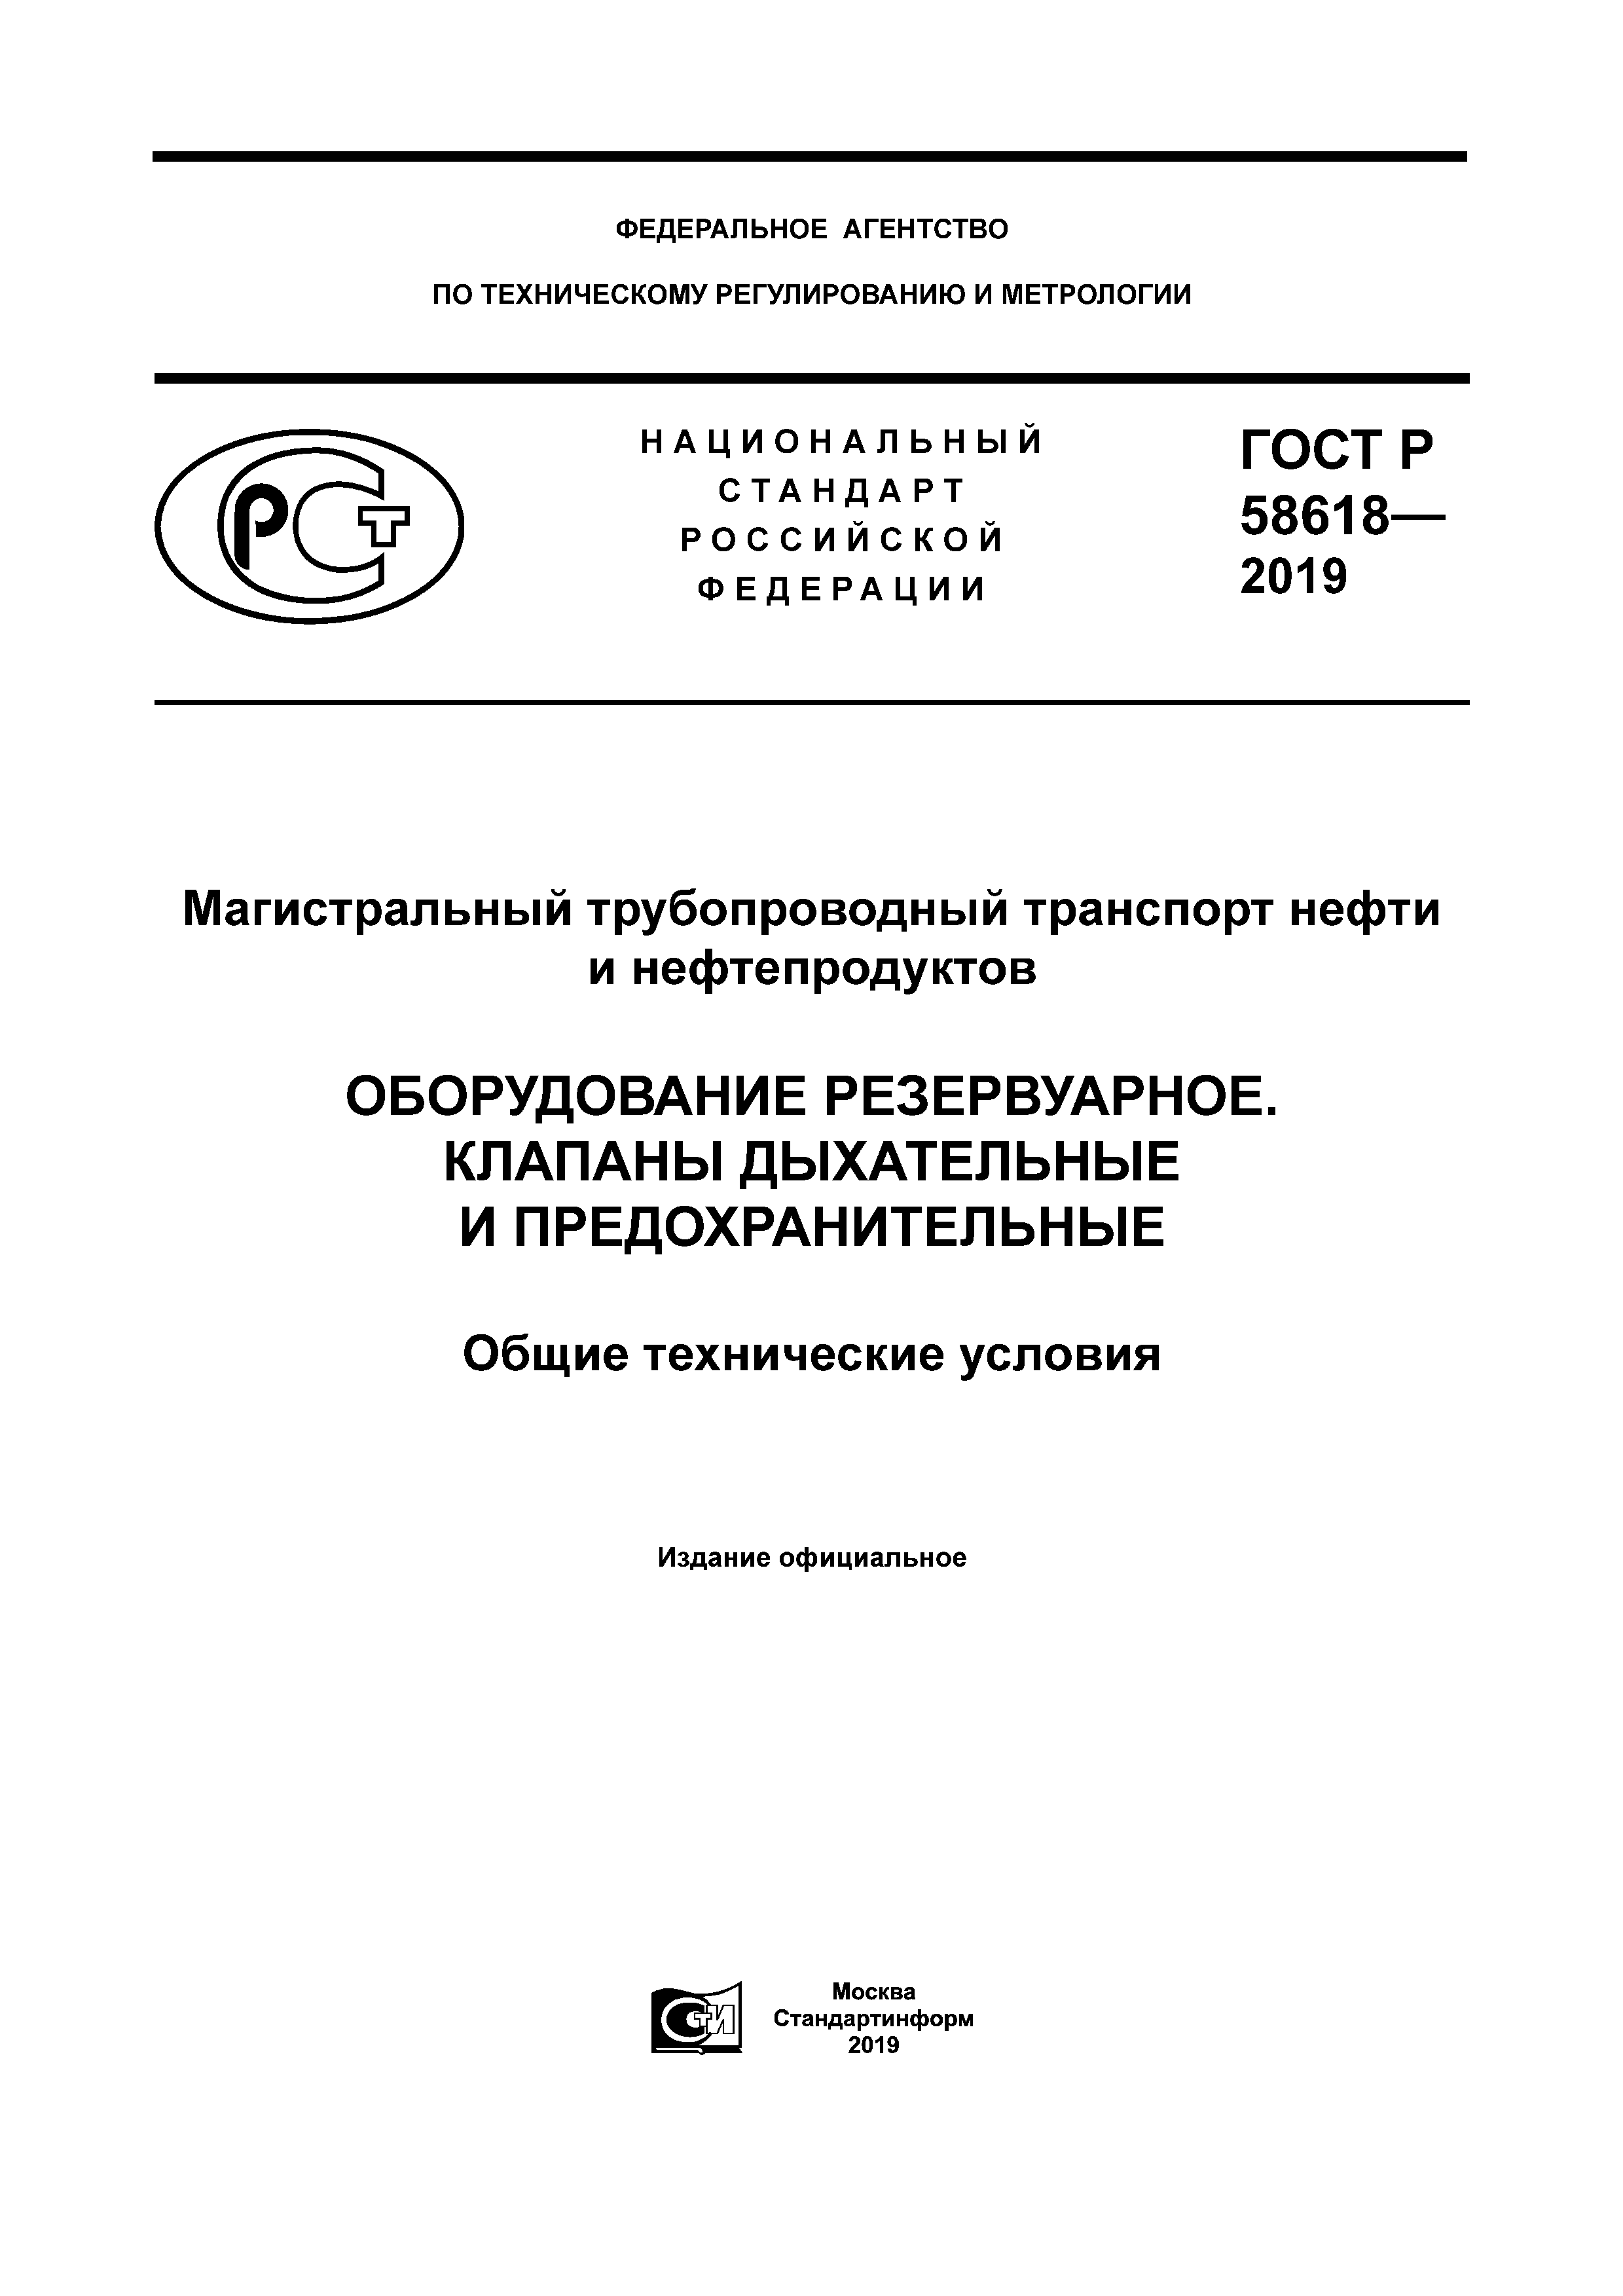 ГОСТ Р 58618-2019